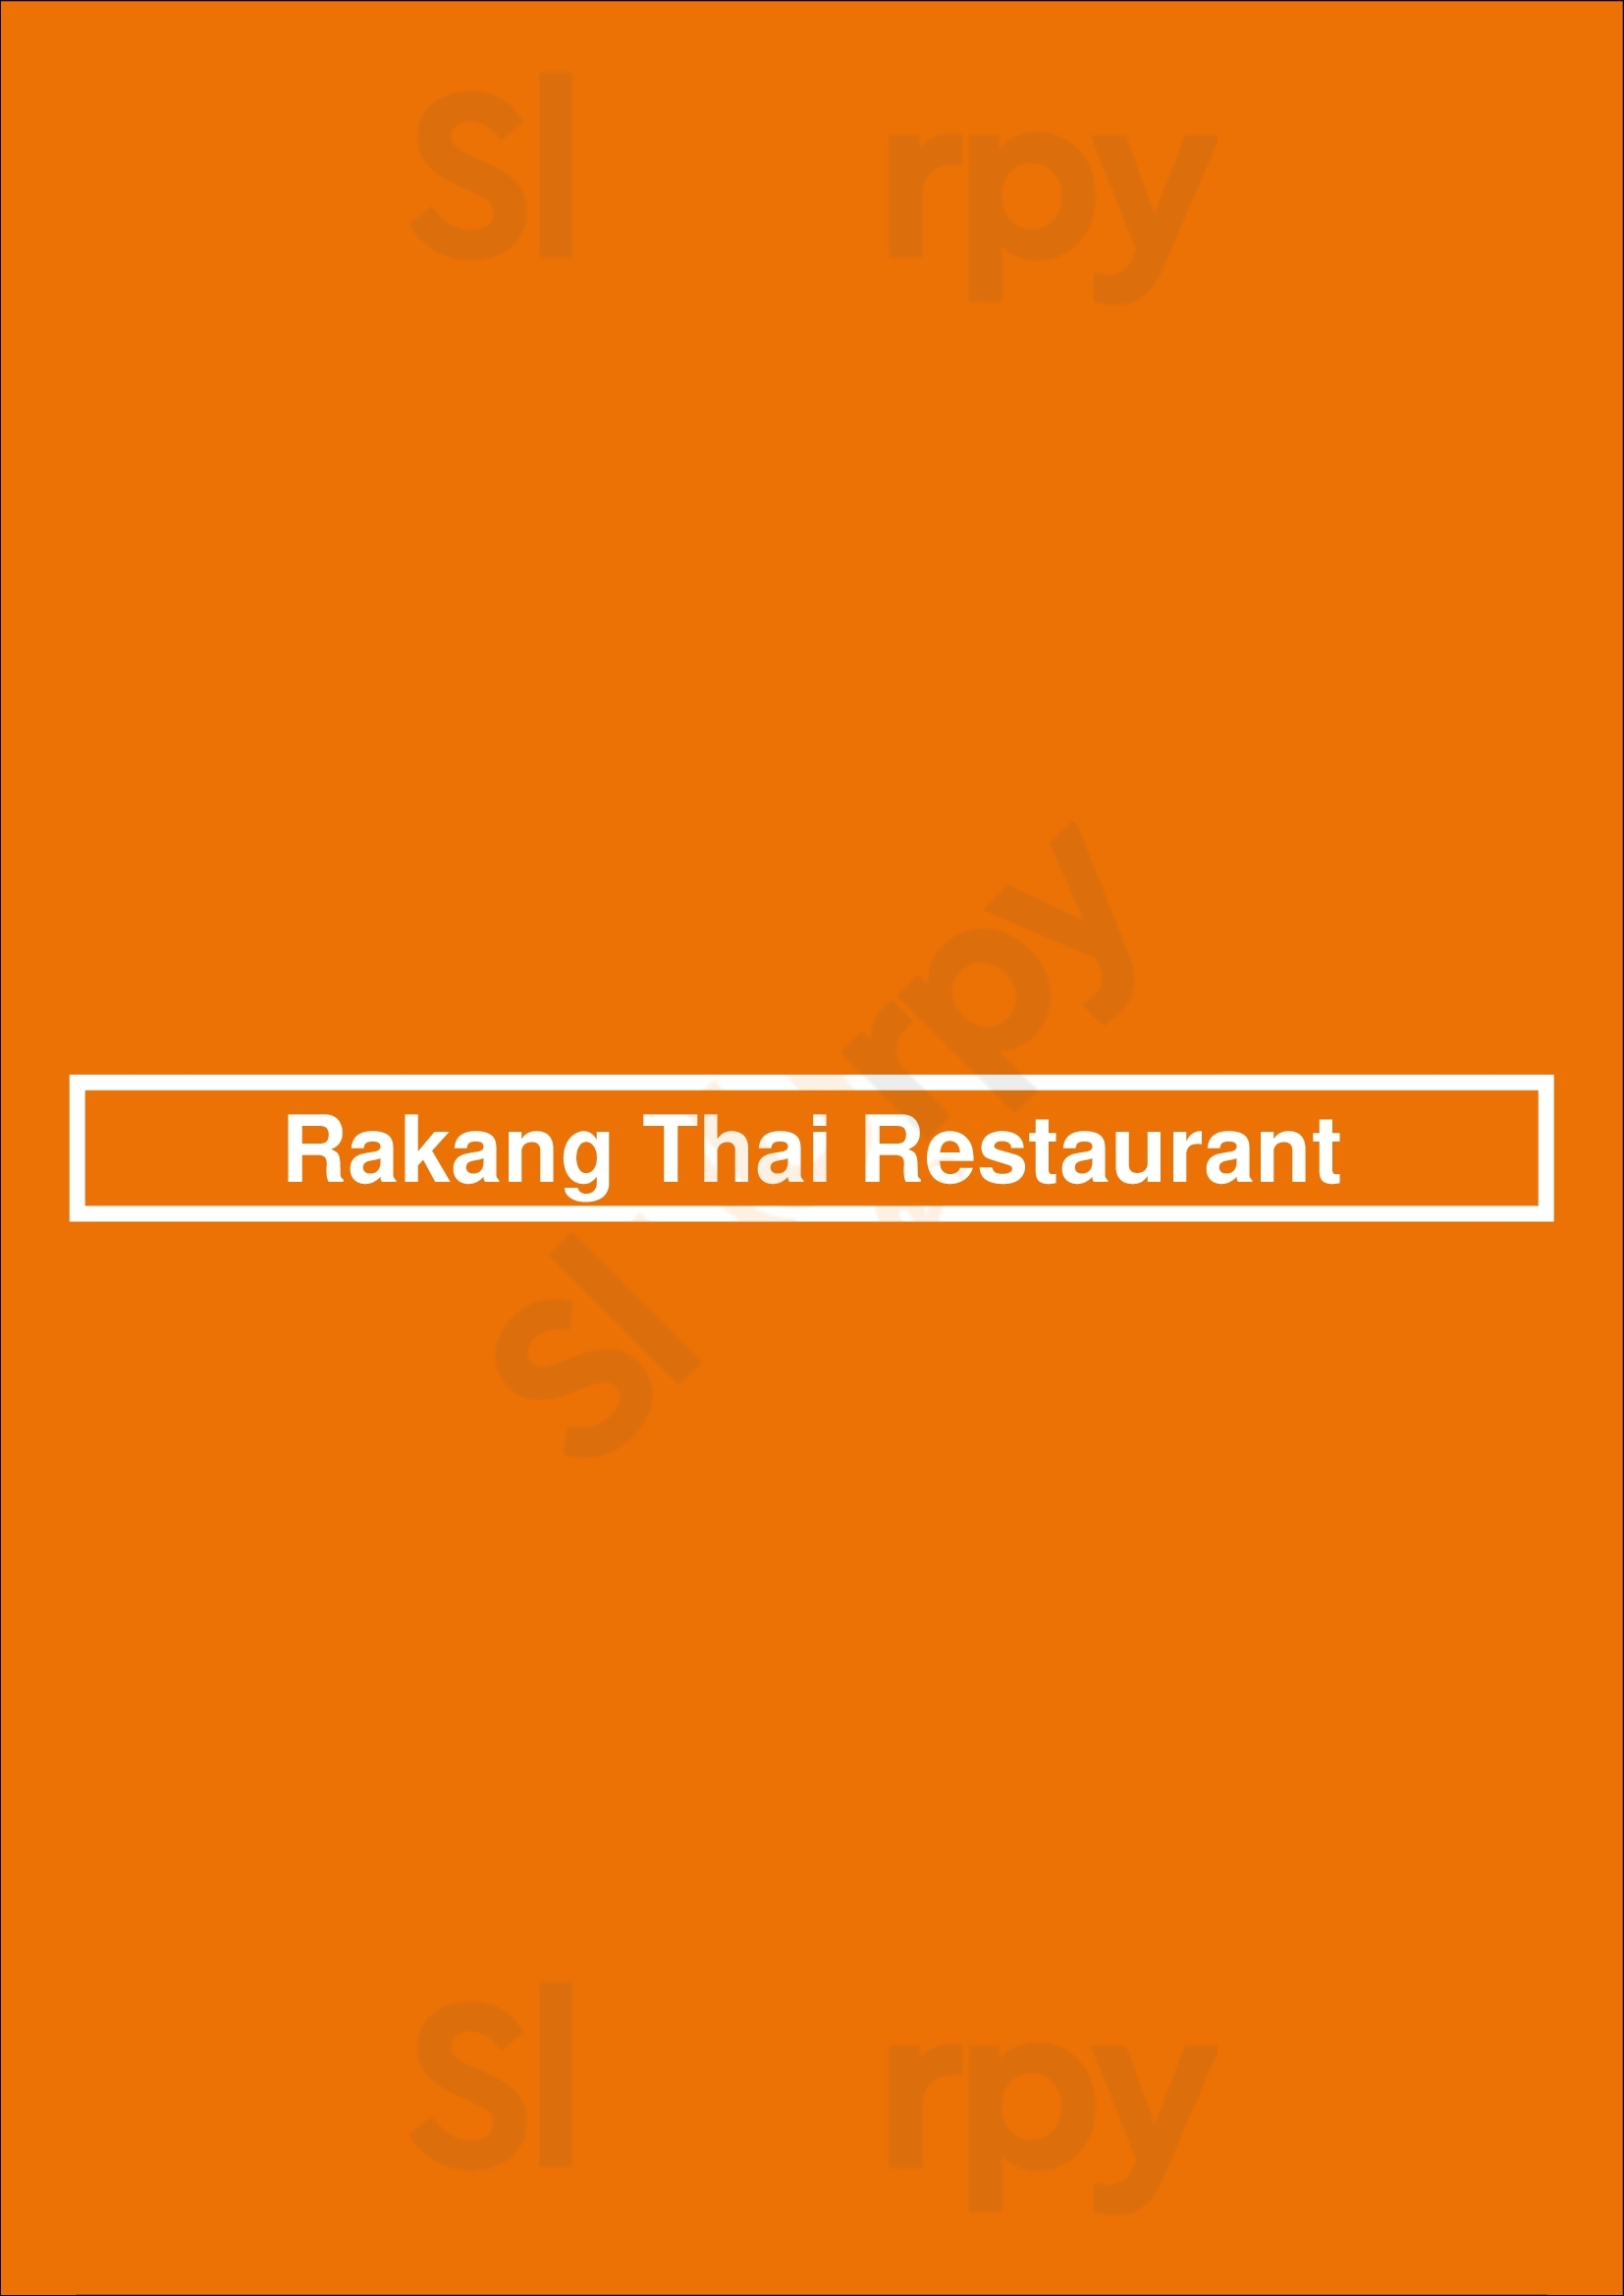 Rakang Thai Restaurant Amsterdam Menu - 1